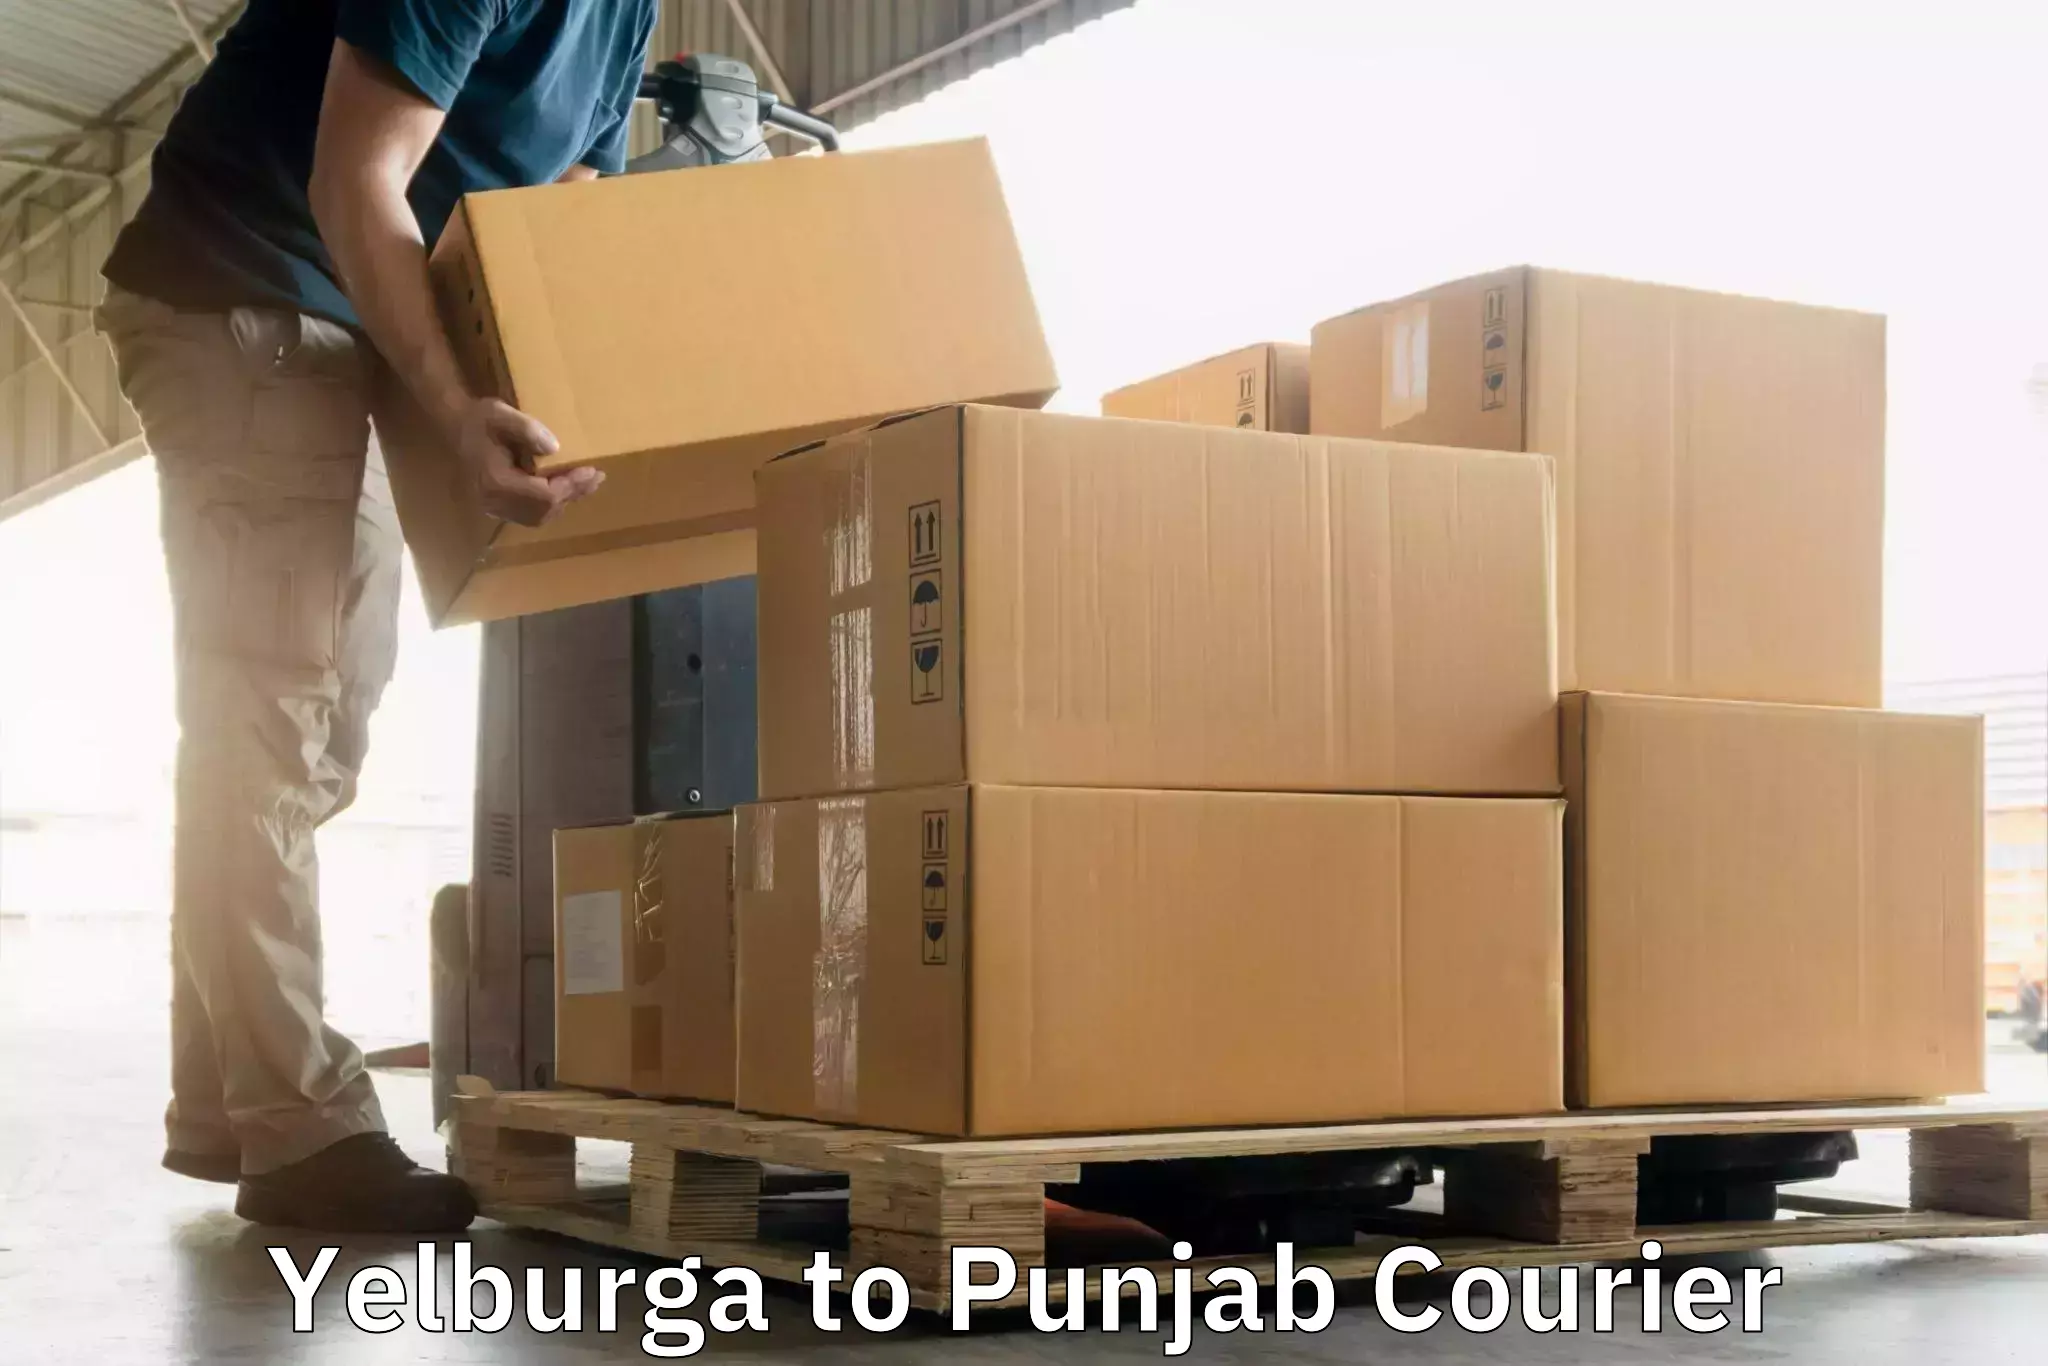 Express delivery capabilities Yelburga to Jalalabad